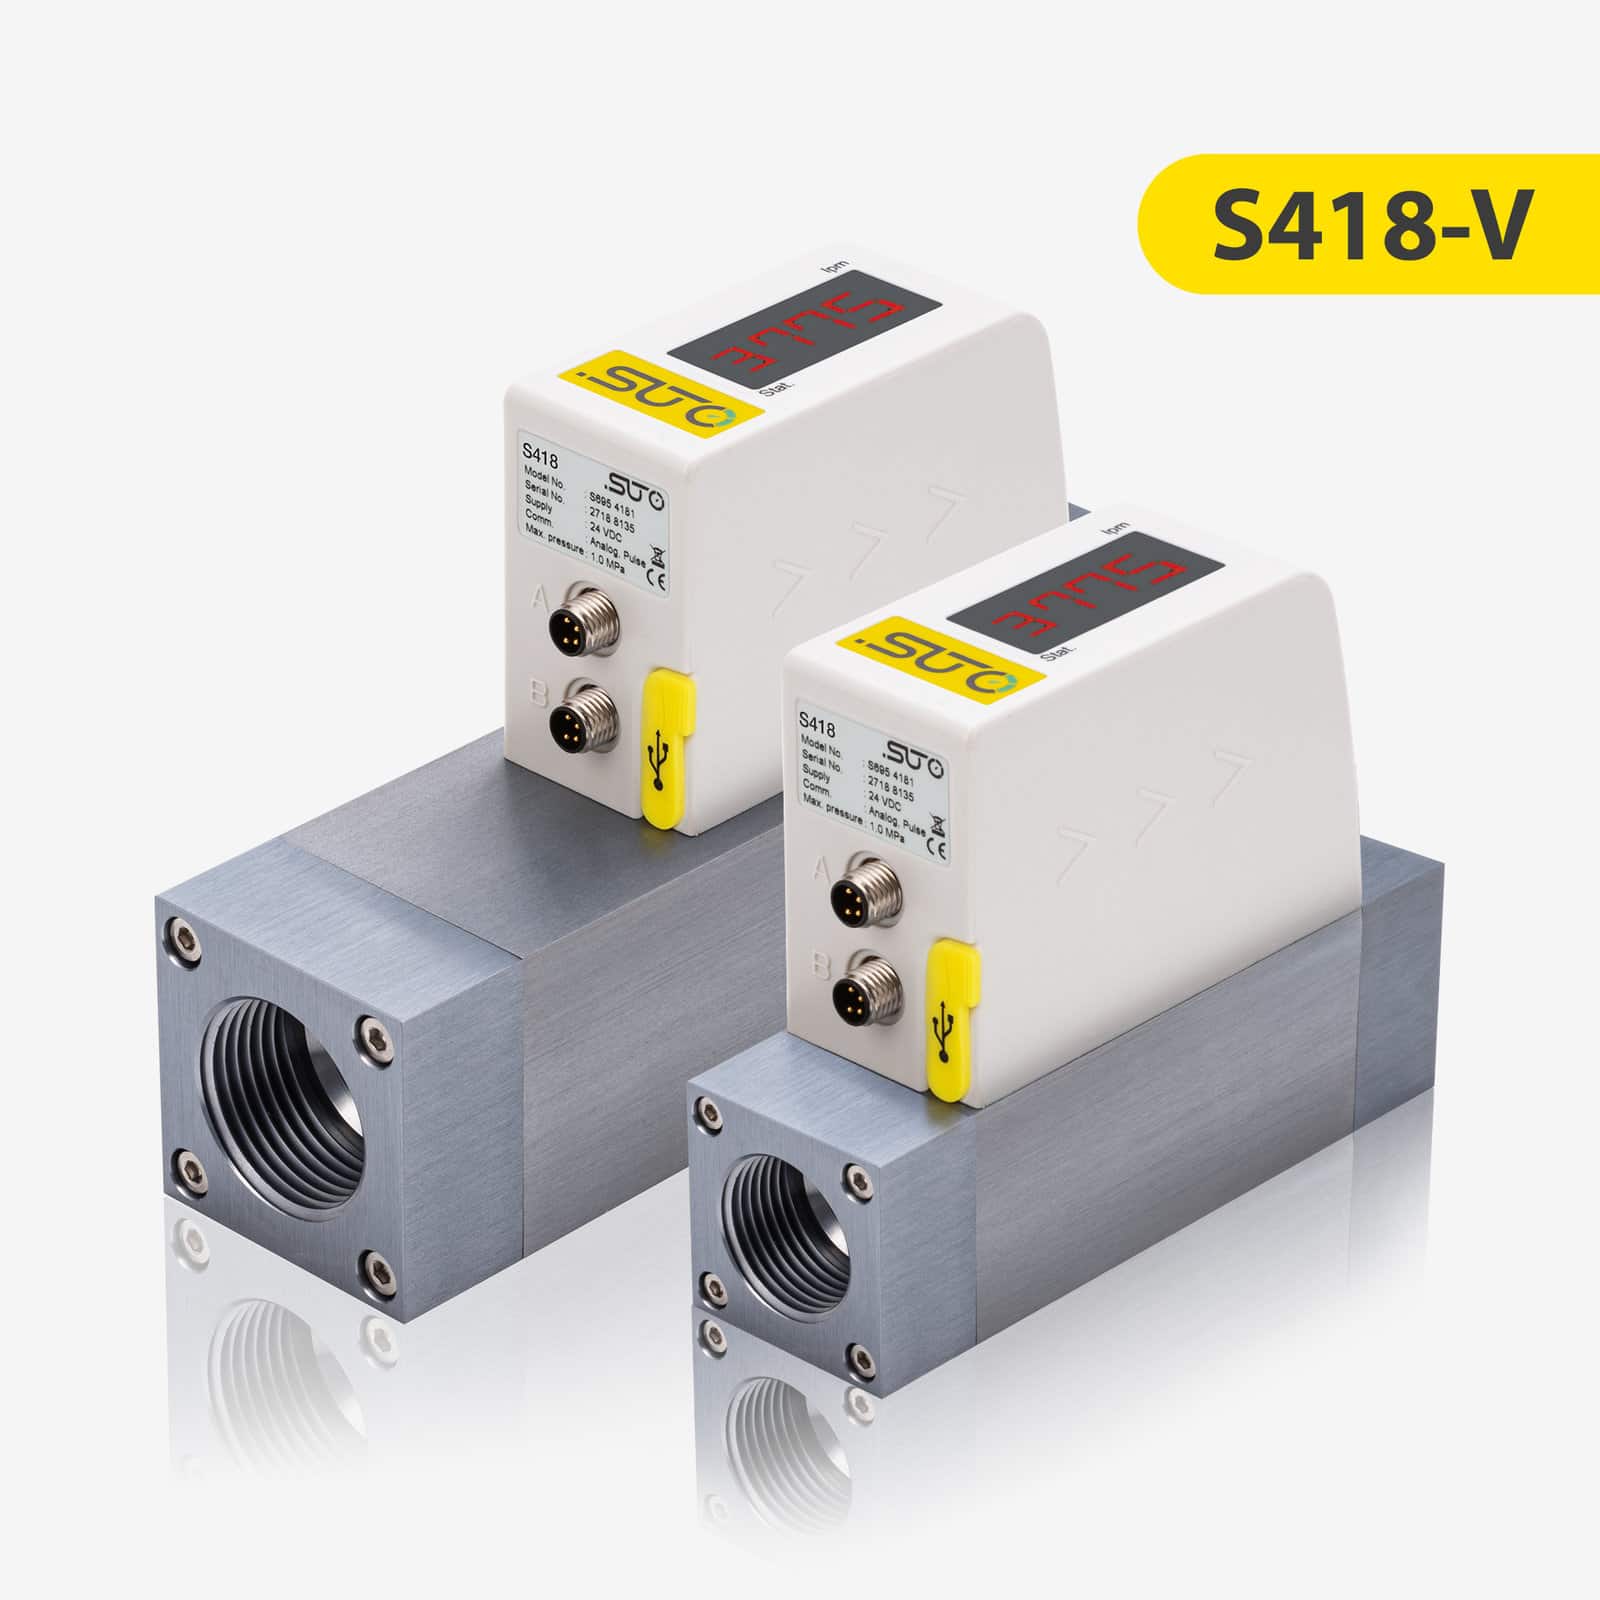 S418-V紧凑型真空流量计 (管道式) – 测量真空流量和压力